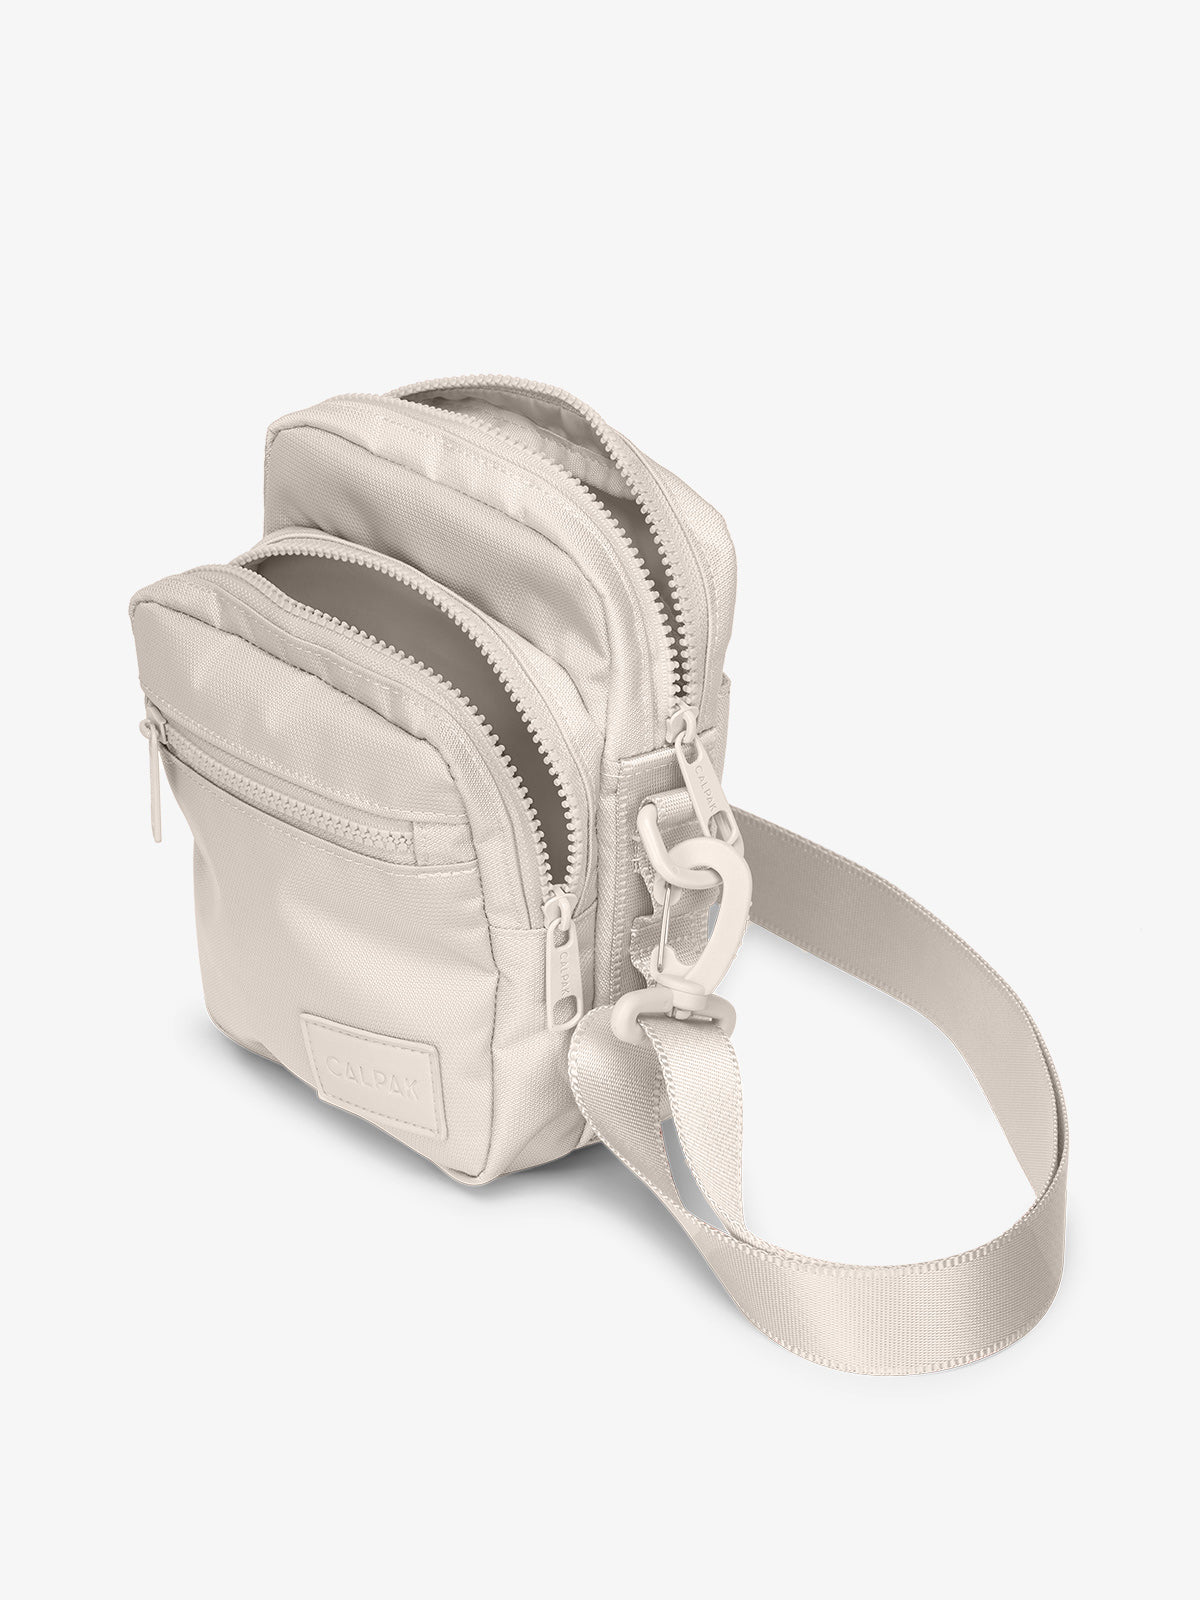 Dune CALPAK Stevyn Mini Crossbody Bag with adjustable shoulder strap, zippered pockets, and interior zipper pocket